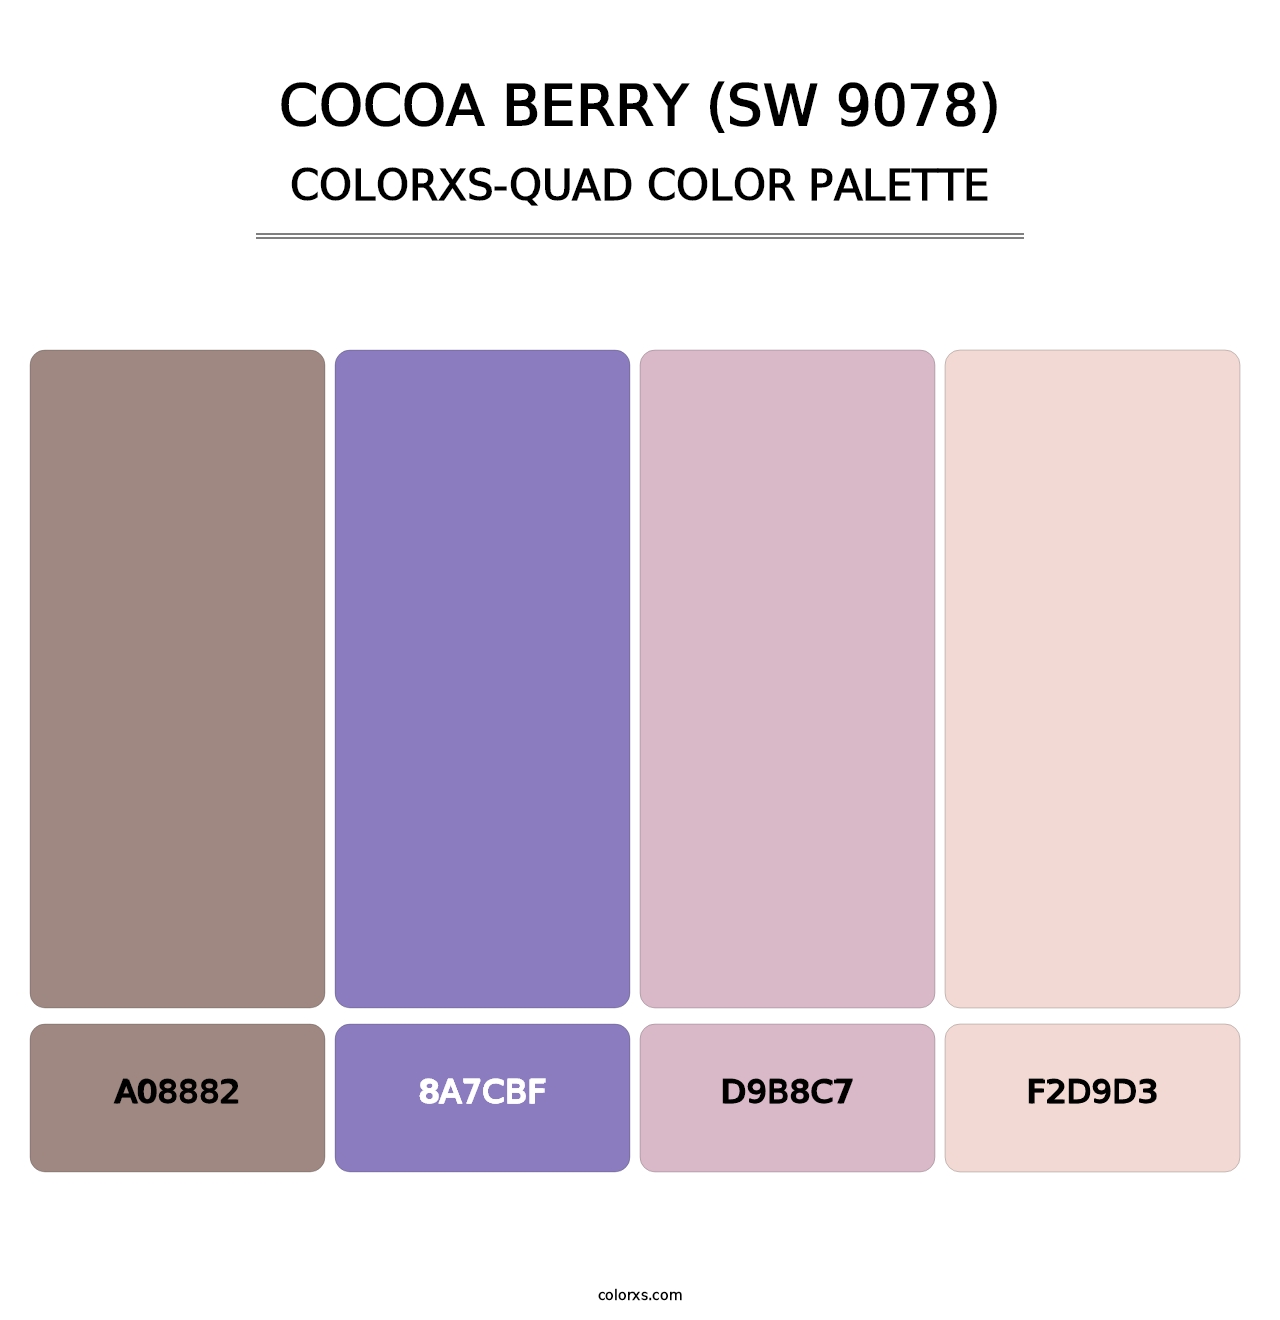 Cocoa Berry (SW 9078) - Colorxs Quad Palette